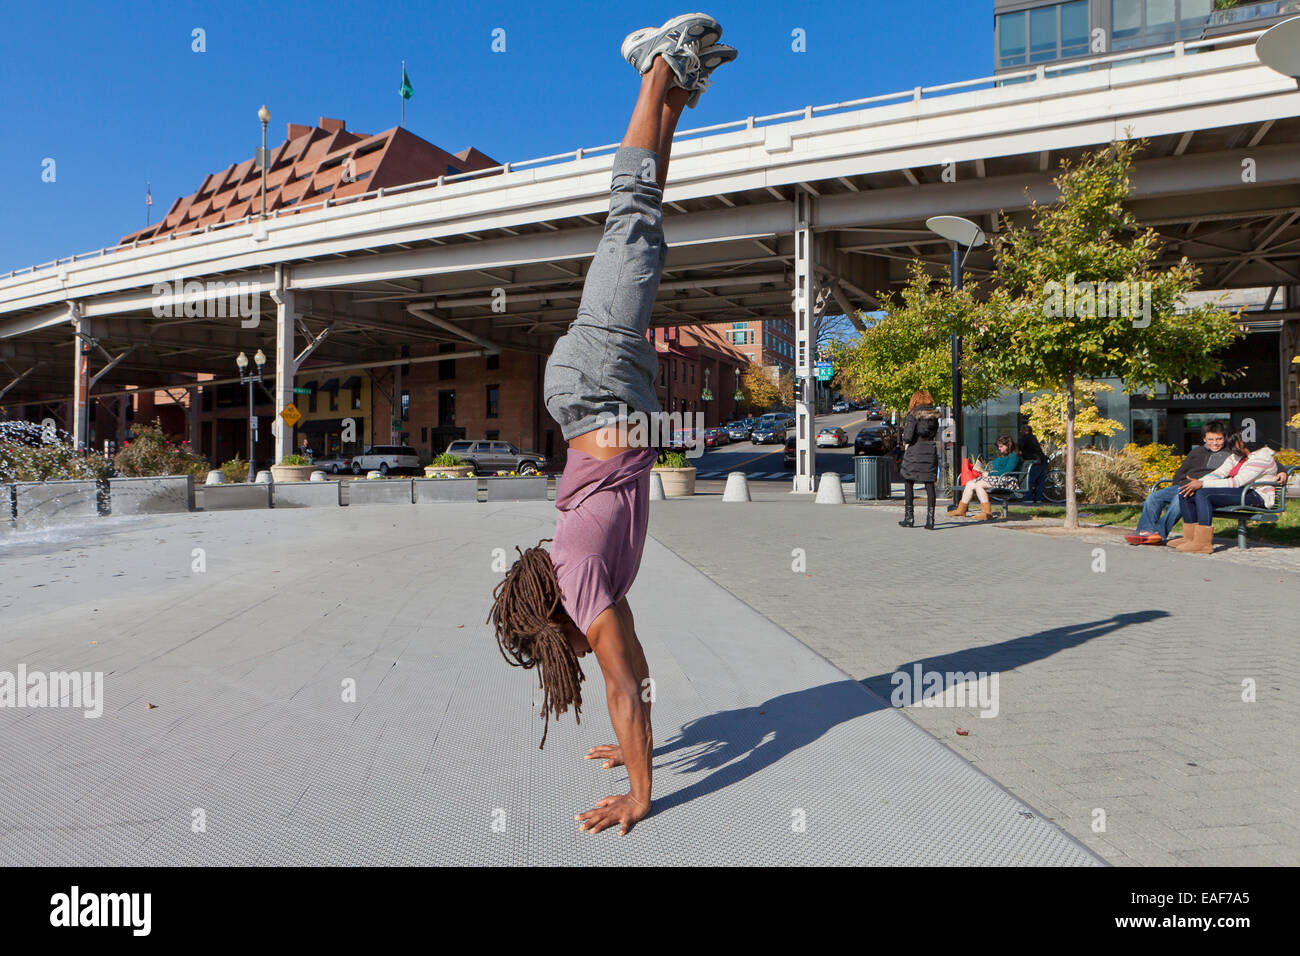 Man doing handstand - Georgetown, Washington, DC USA Stock Photo